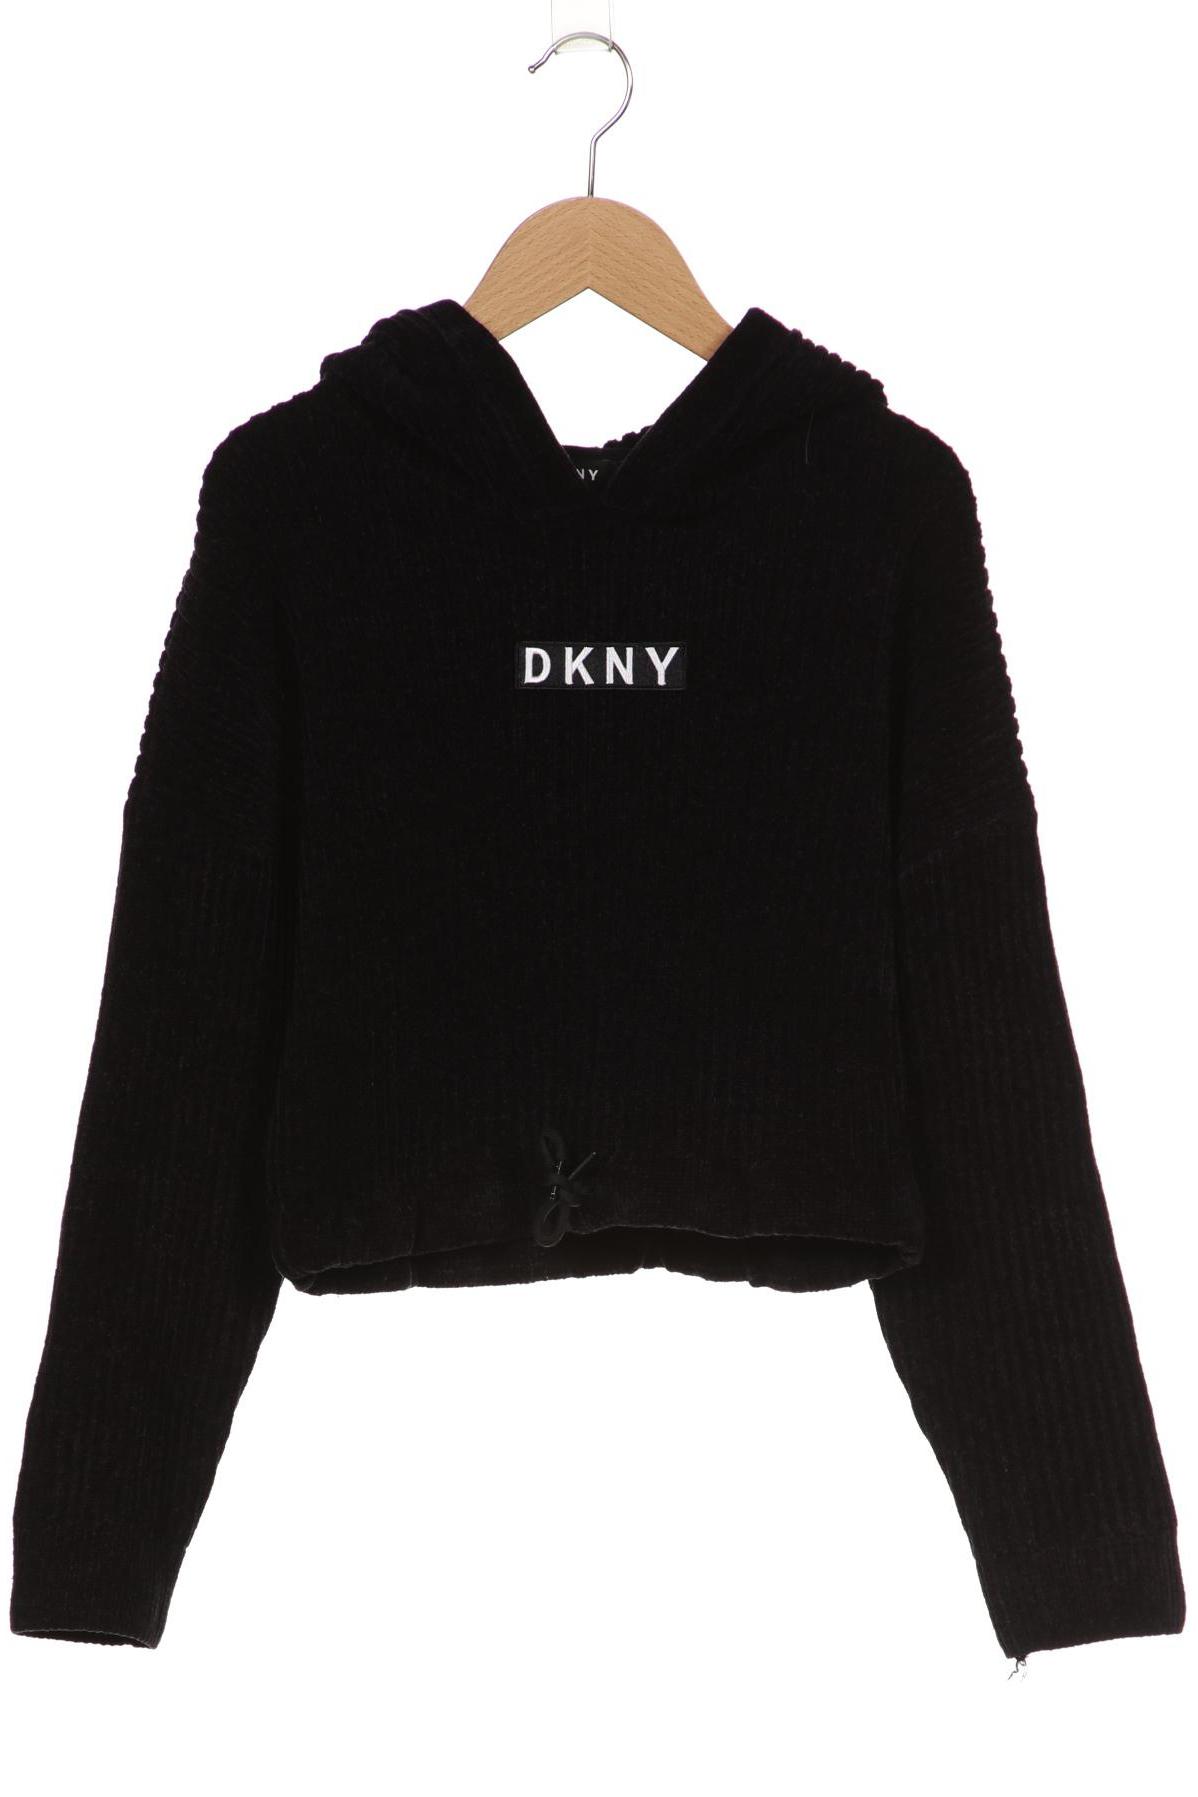 DKNY by Donna Karan New York Damen Pullover, schwarz von DKNY by Donna Karan New York